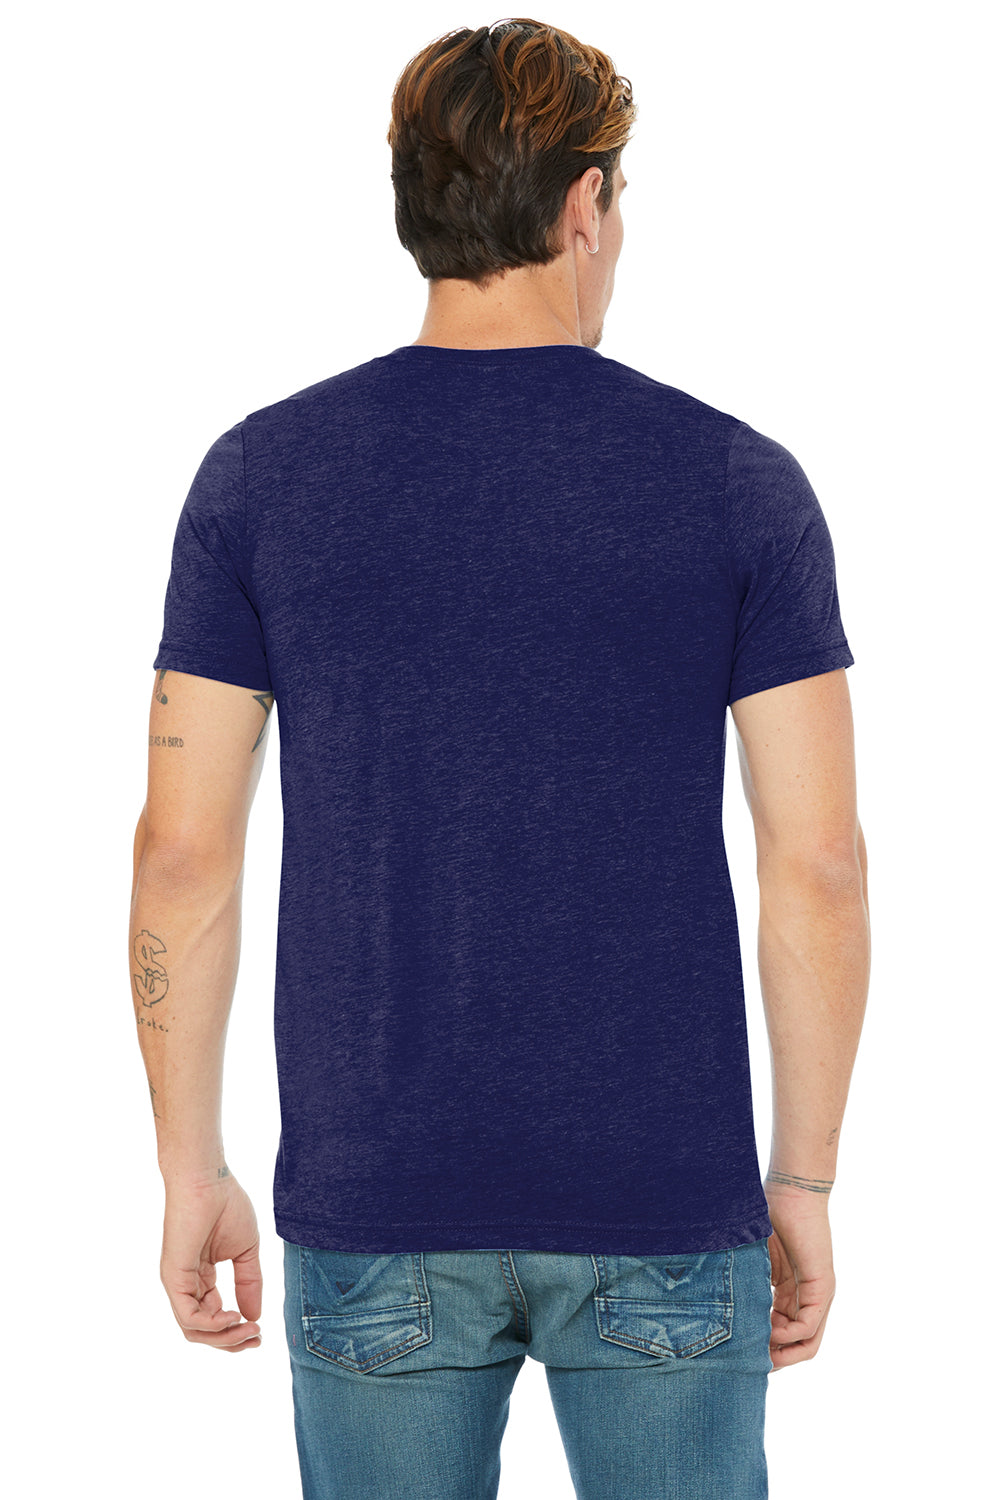 Bella + Canvas BC3415/3415C/3415 Mens Short Sleeve V-Neck T-Shirt Navy Blue Model Back